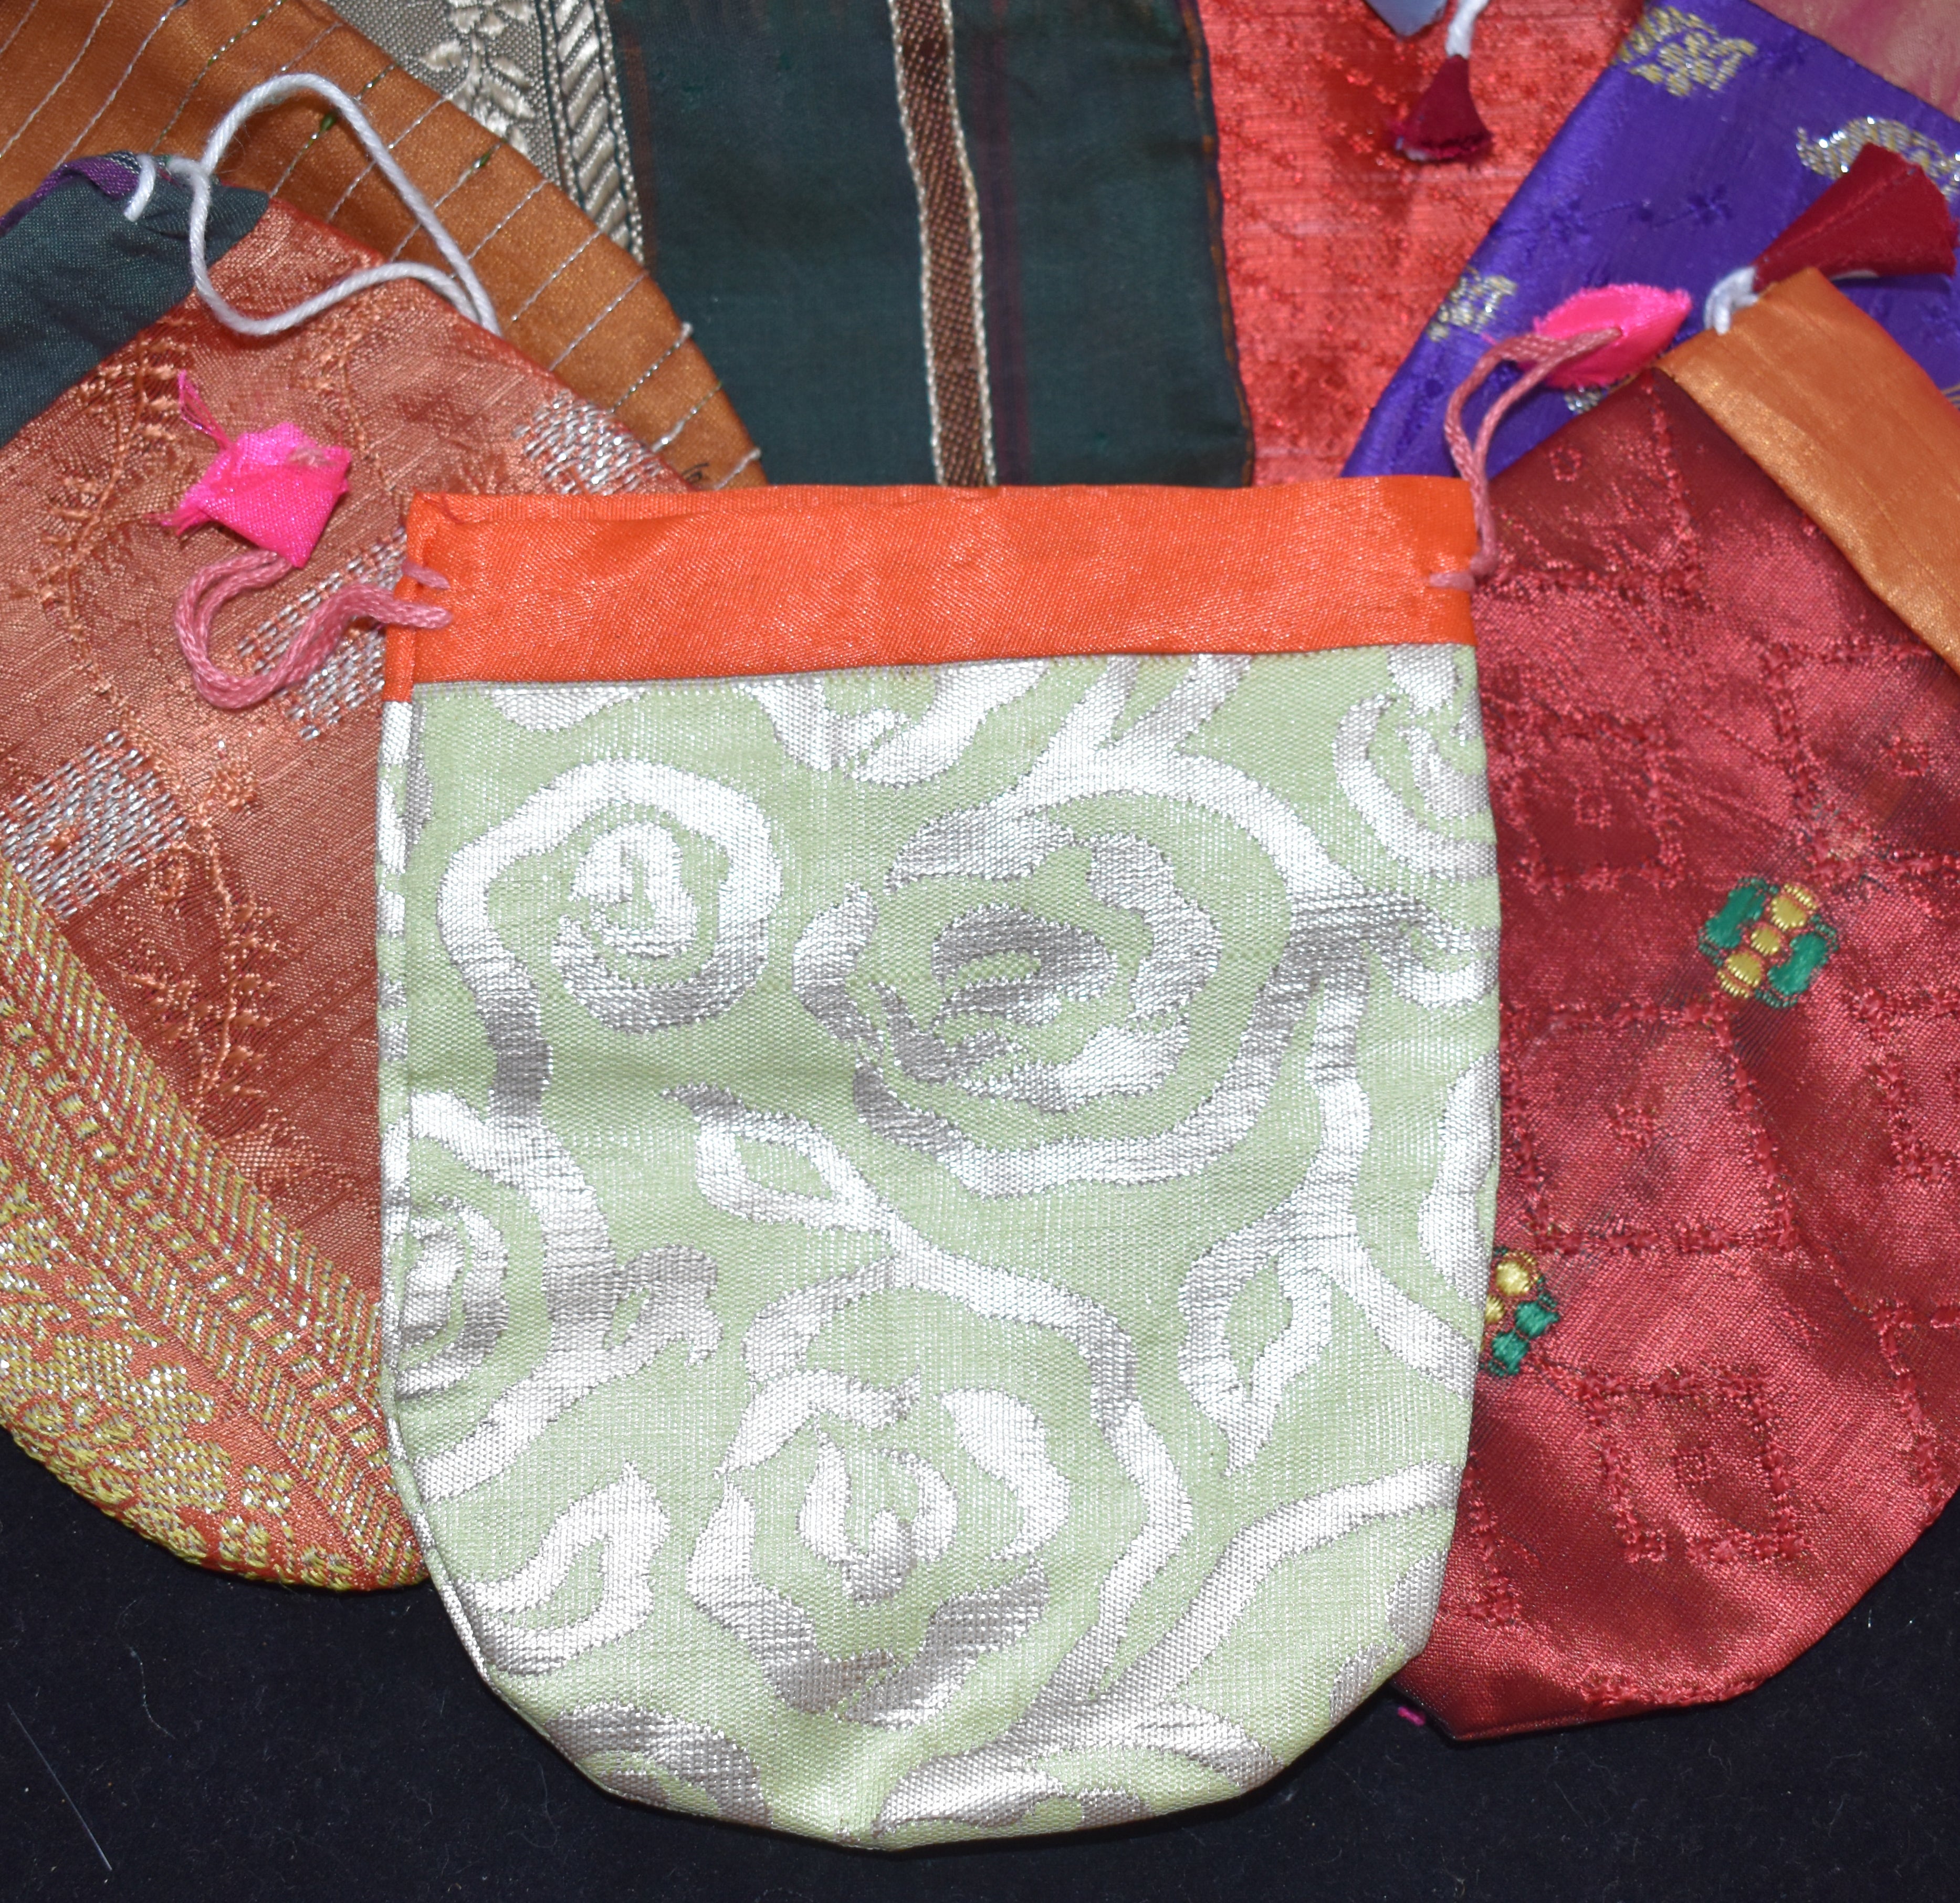 Full Transparent Big Saree Cover | Closet Storage Pack Of 6 Pcs. at Rs  1098.00 | साड़ी कवर - Annapurna Sales, North 24 Parganas | ID: 25875743355